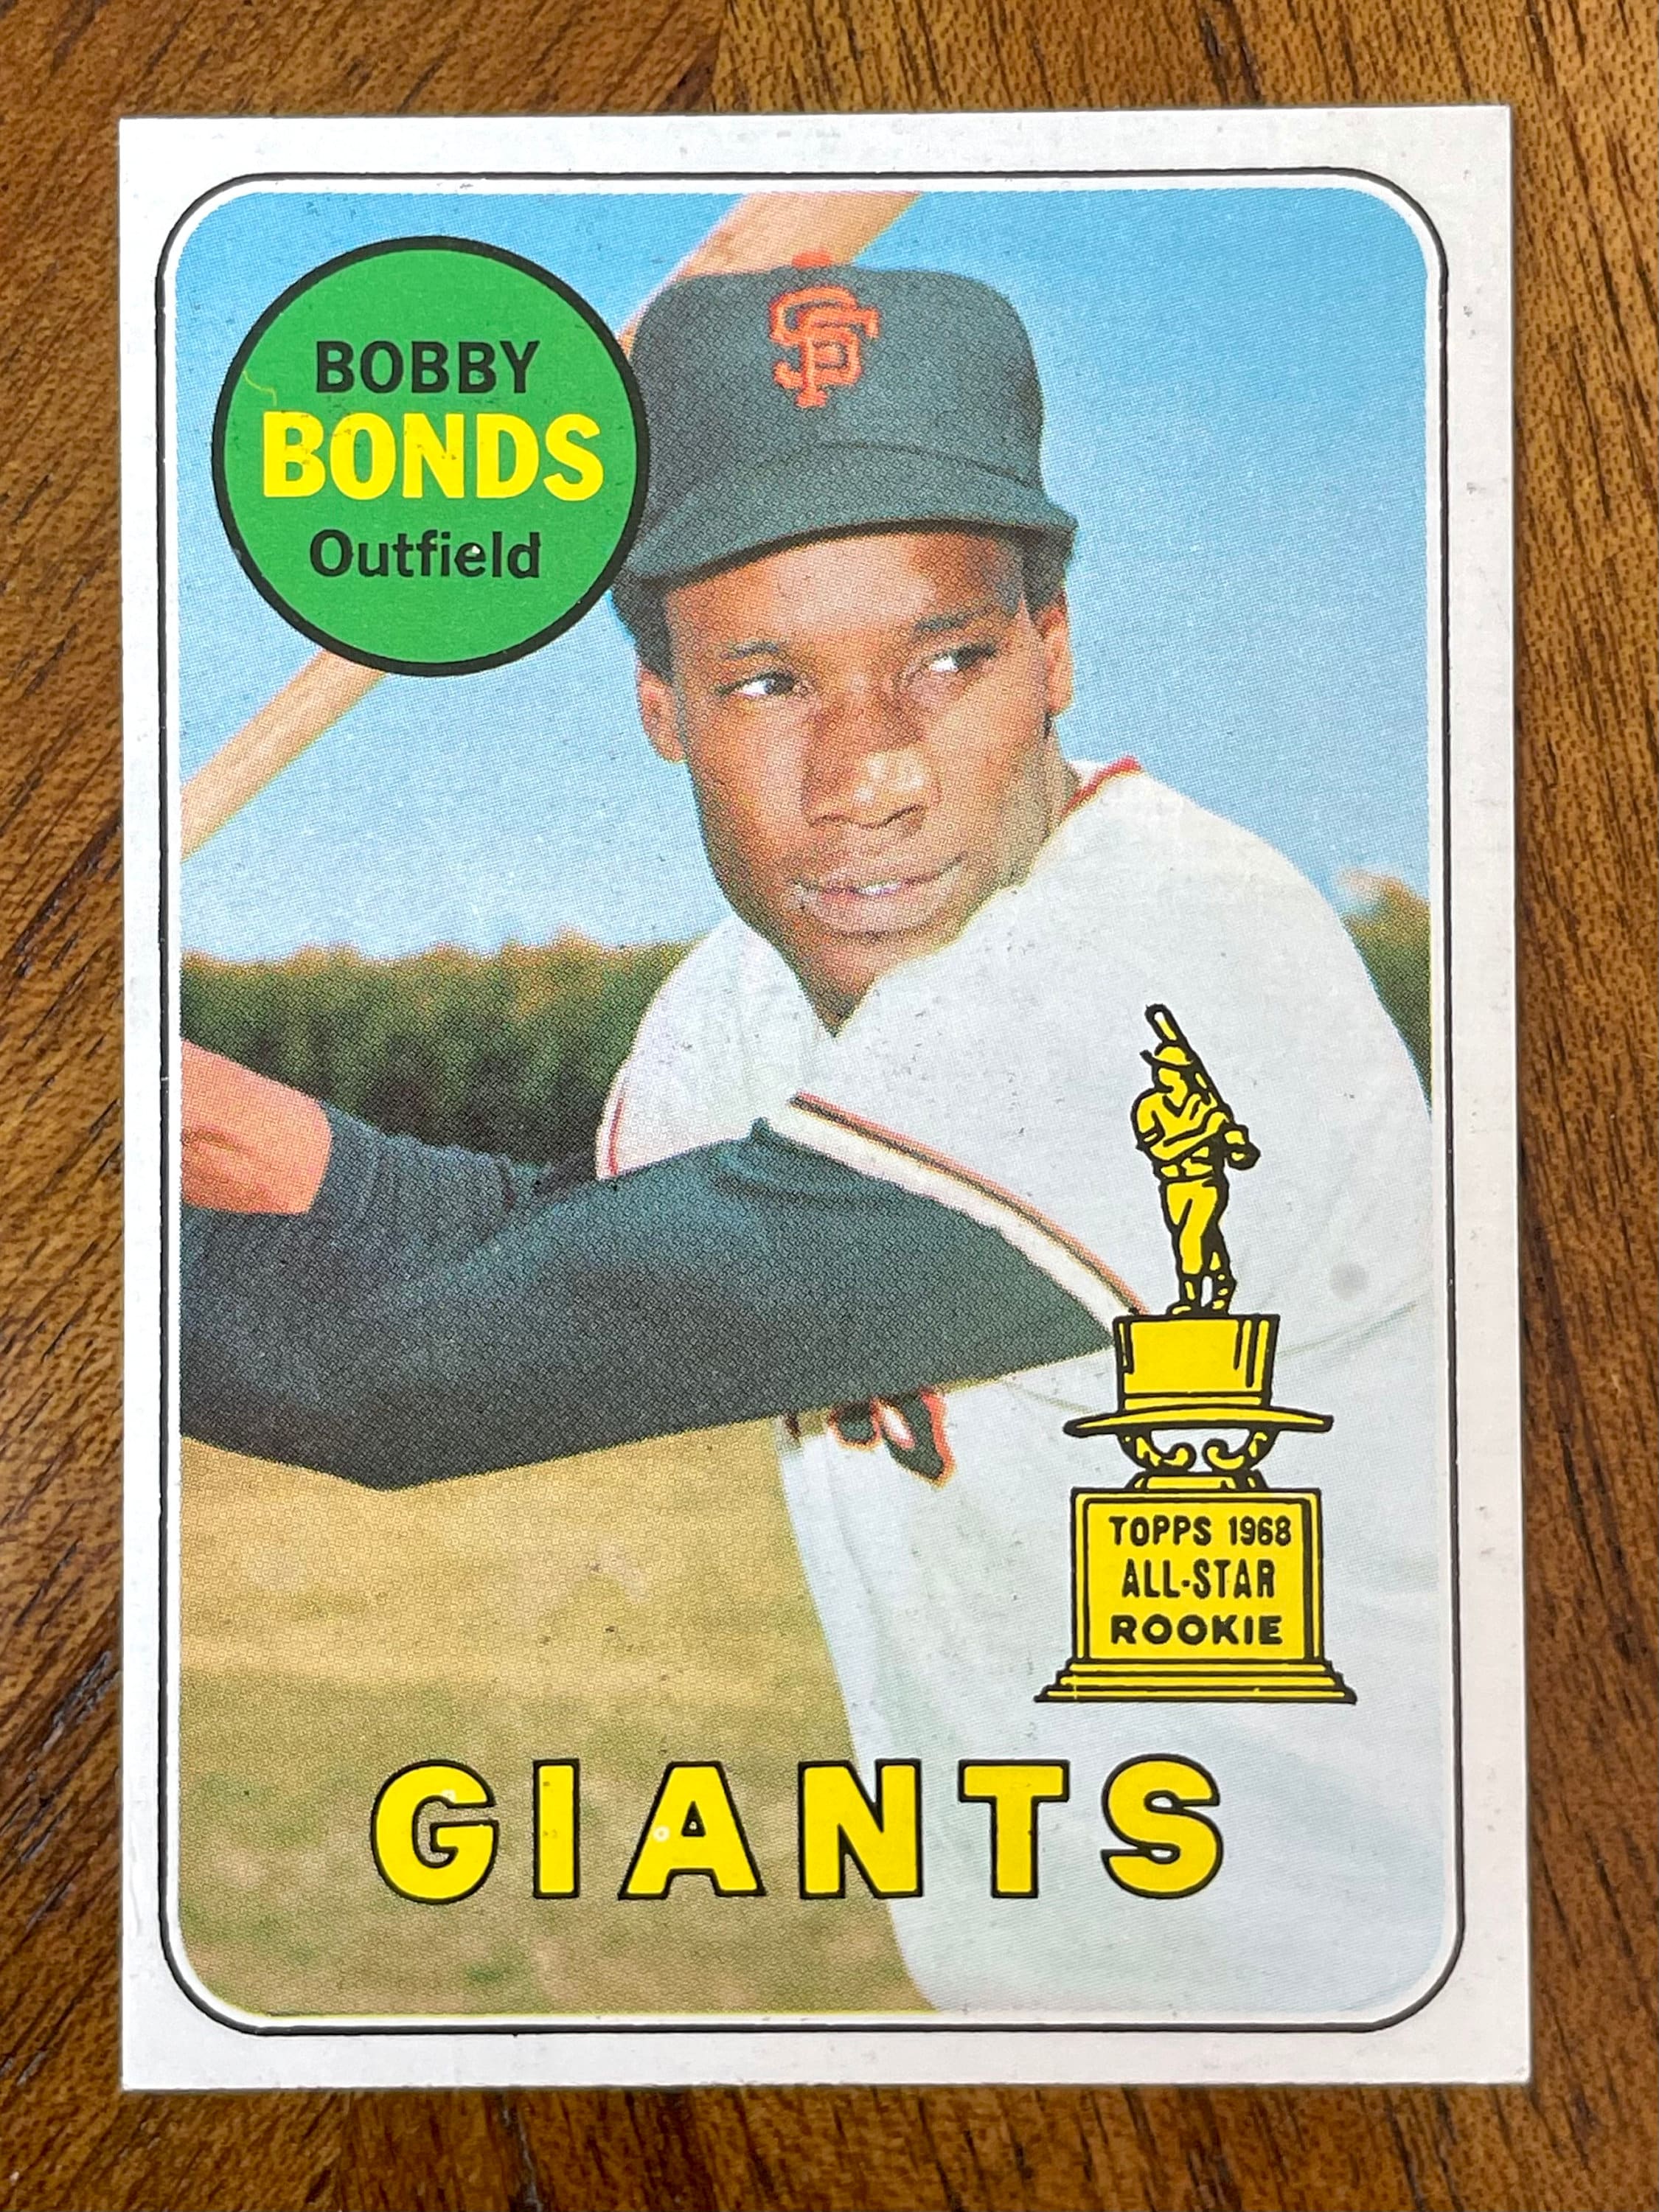 1969 Bobby Bonds RC High Number 630 Topps Baseball Card -  Israel